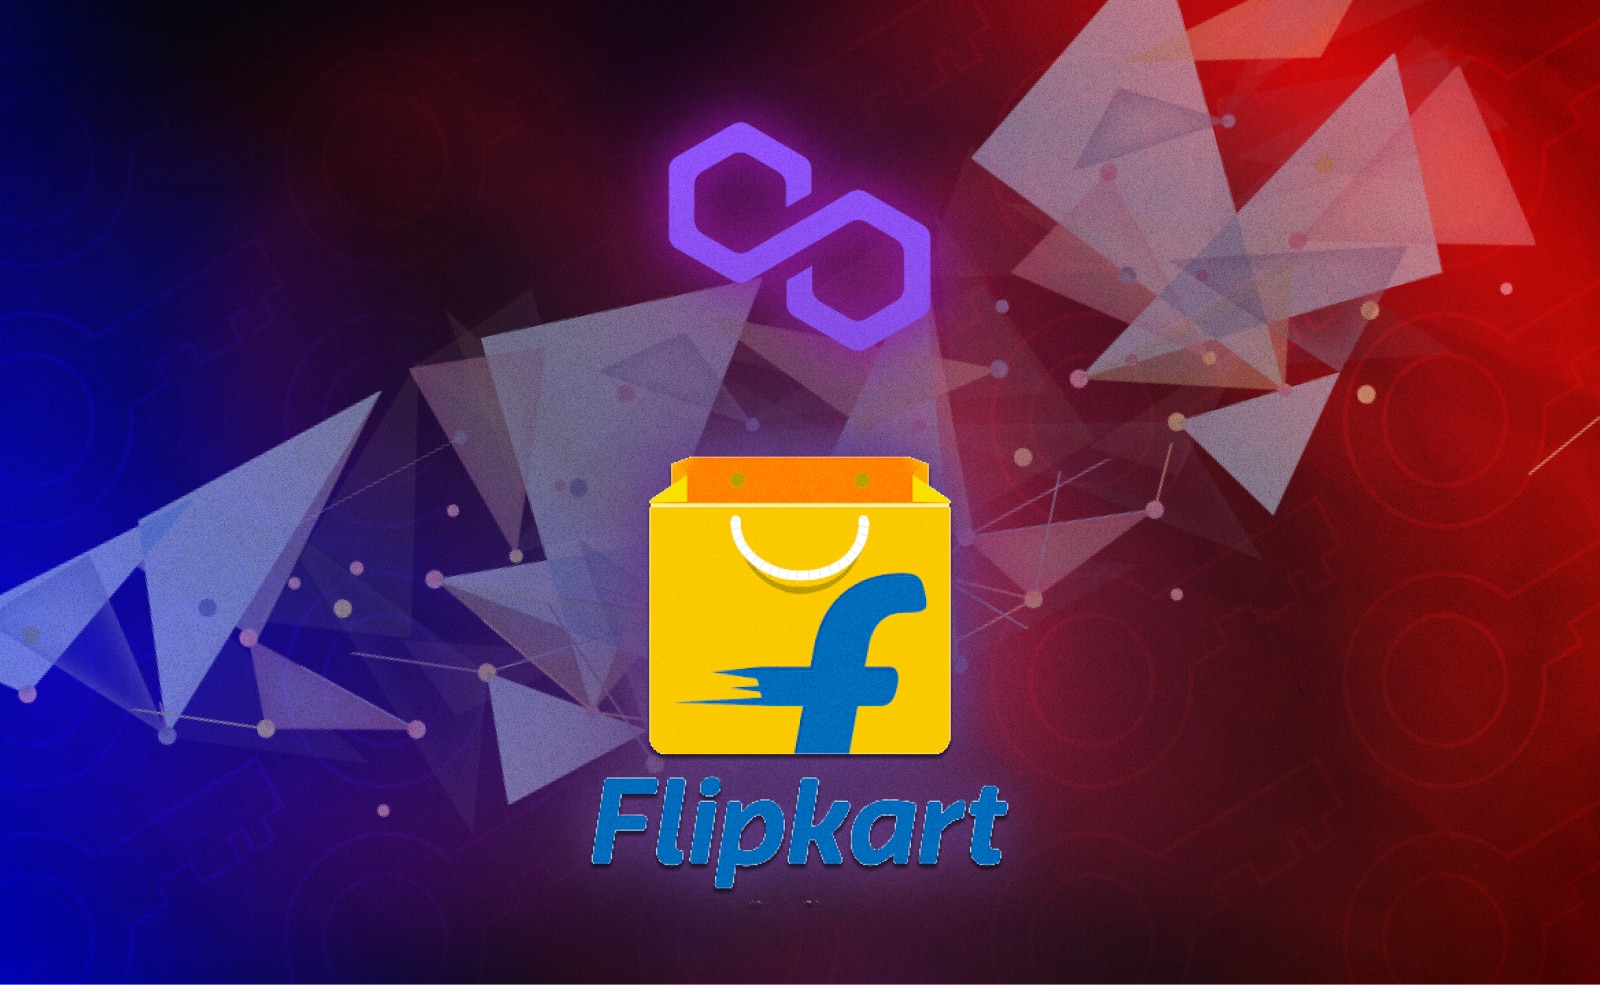 Polygon став партнером топового маркетплейса Flipkart. Головний колаж новини.